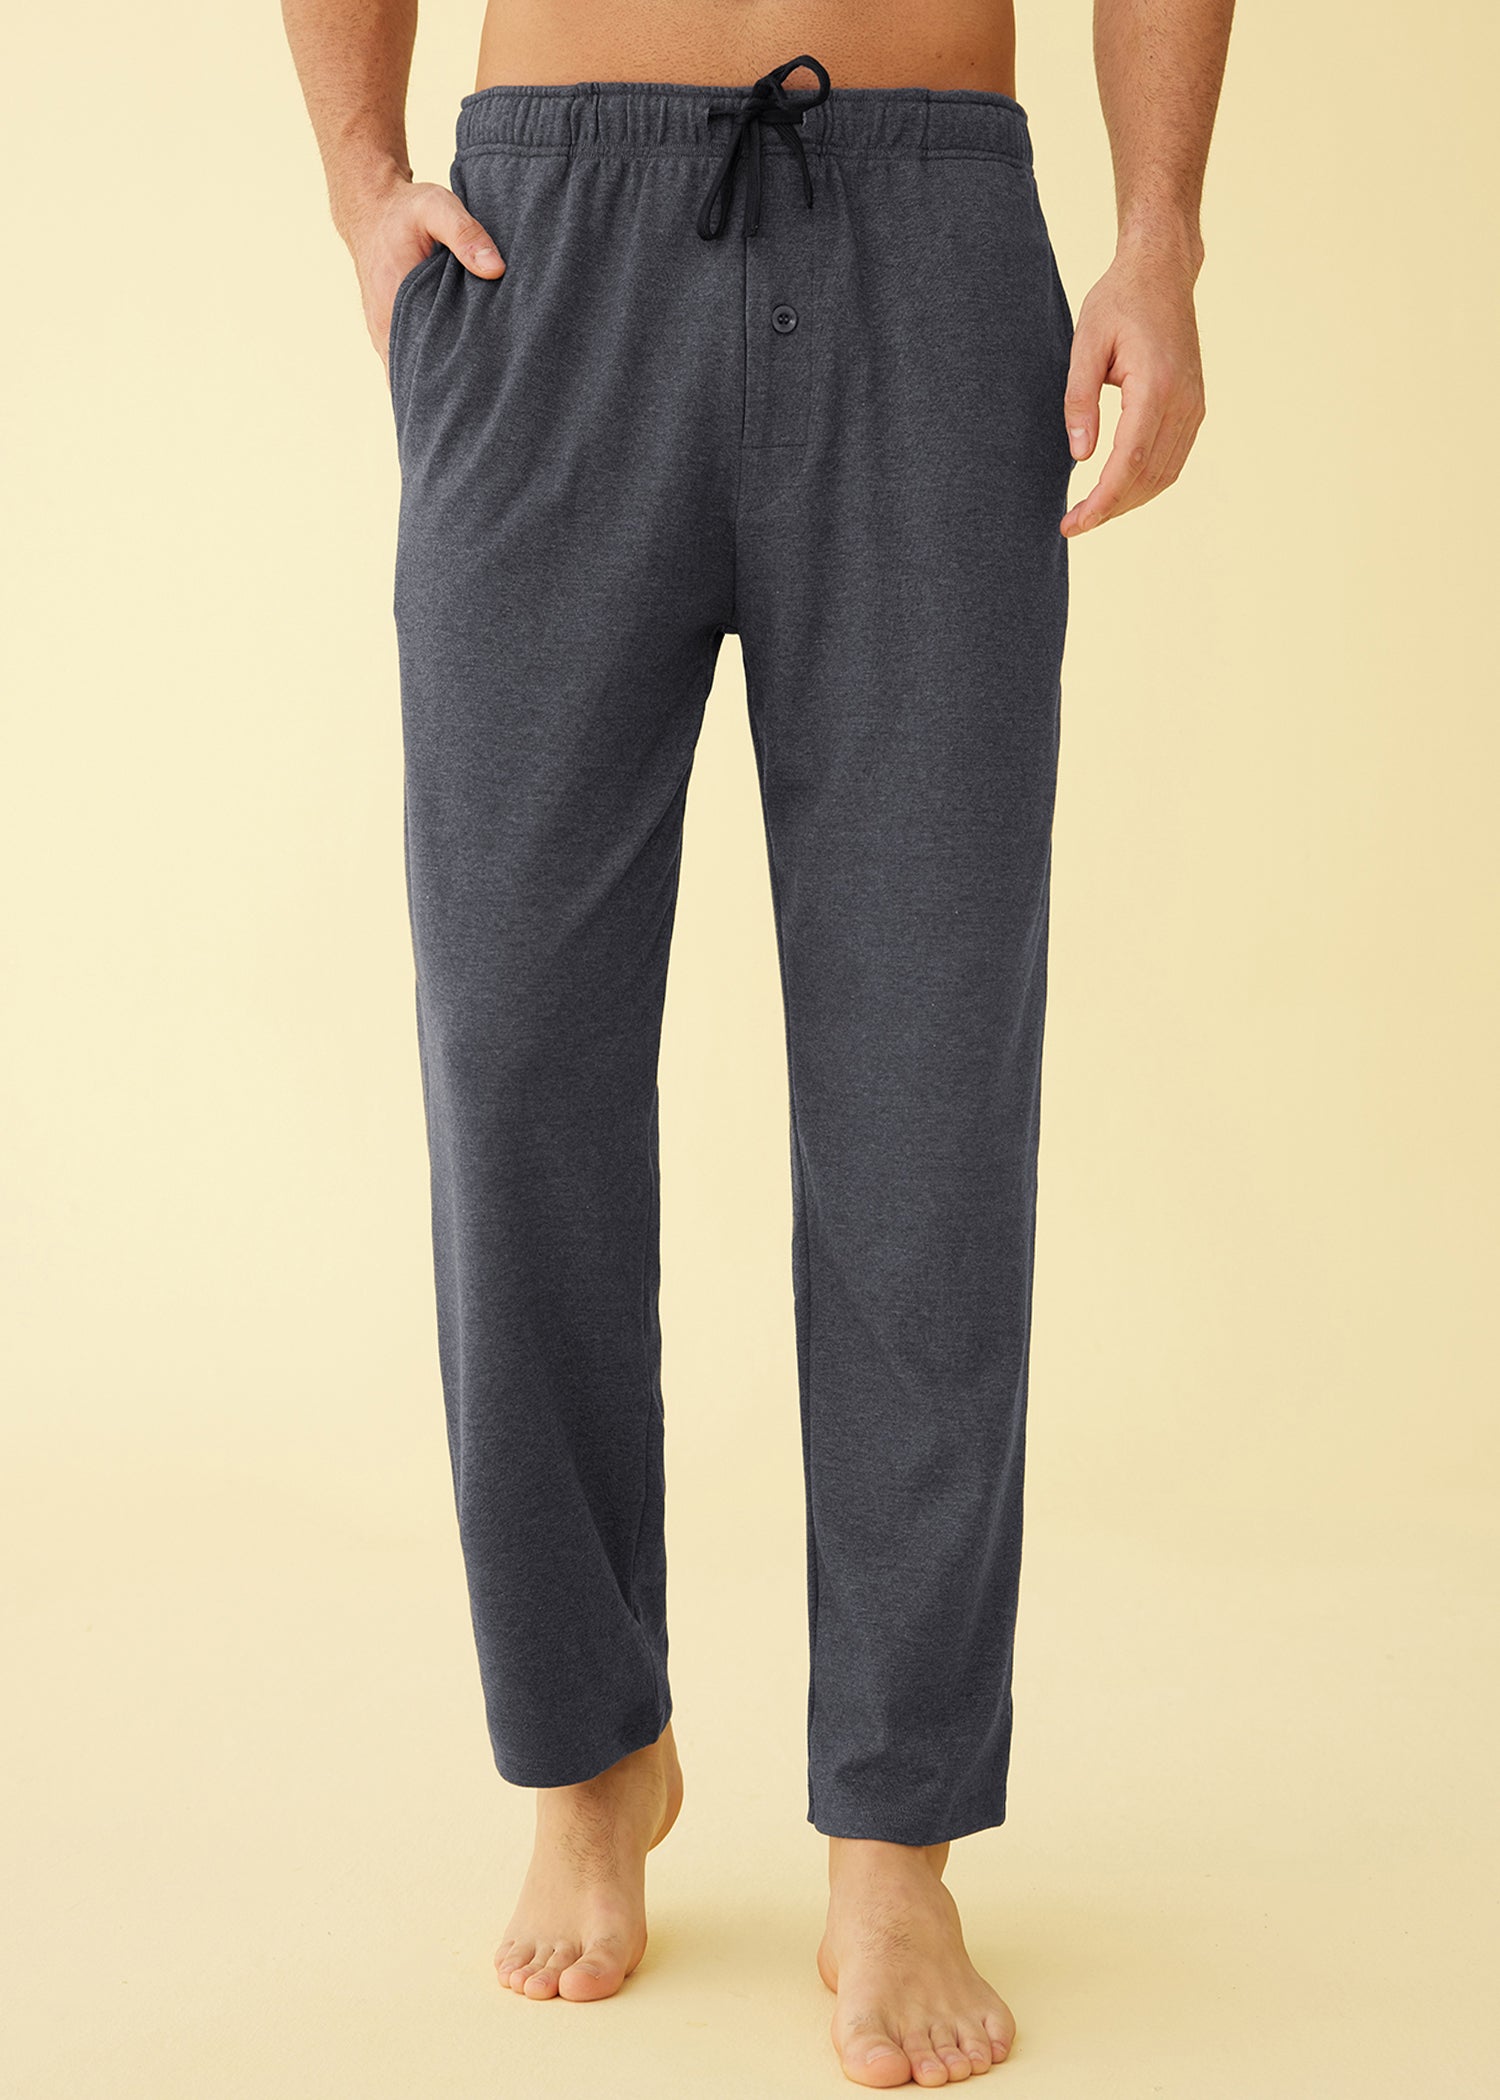 Women Pajama Pants Warm Fleece Lounge Pants Sleepwear Bottoms Trousers with  Pockets